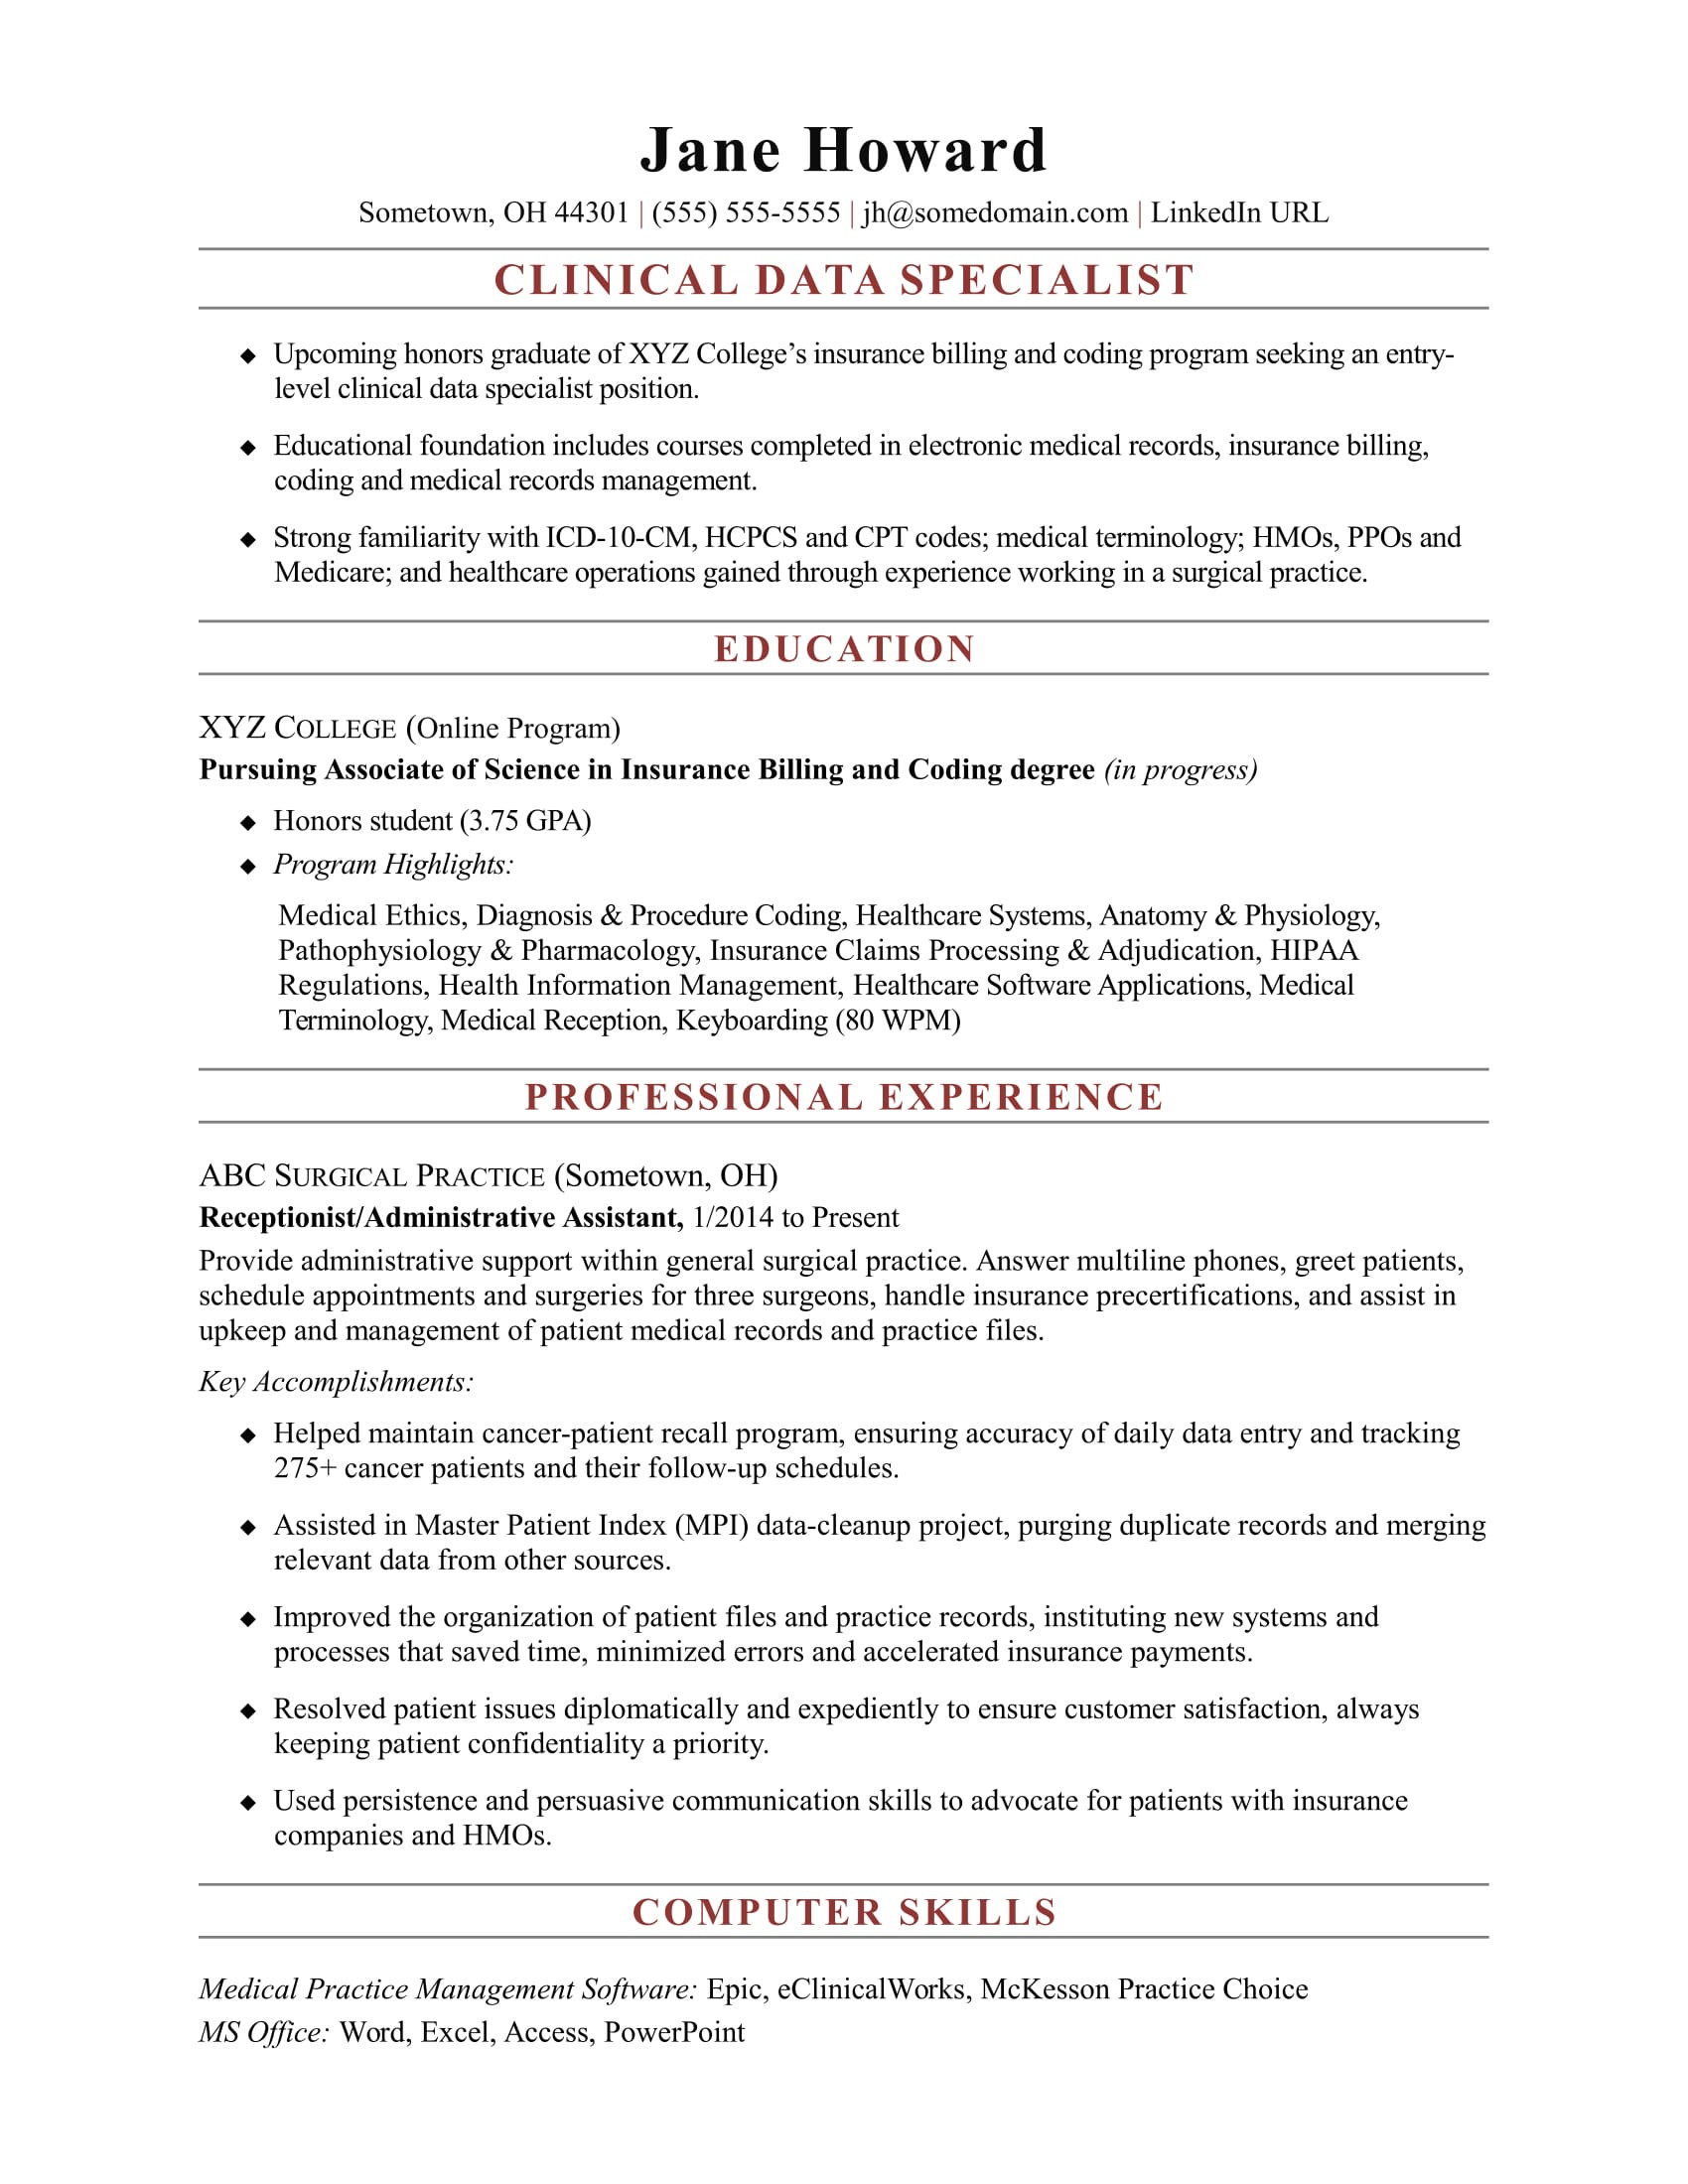 Emr Ehr Healthcare Claim Data Related Sample Resumes Entry-level Clinical Data Specialist Resume Sample Monster.com